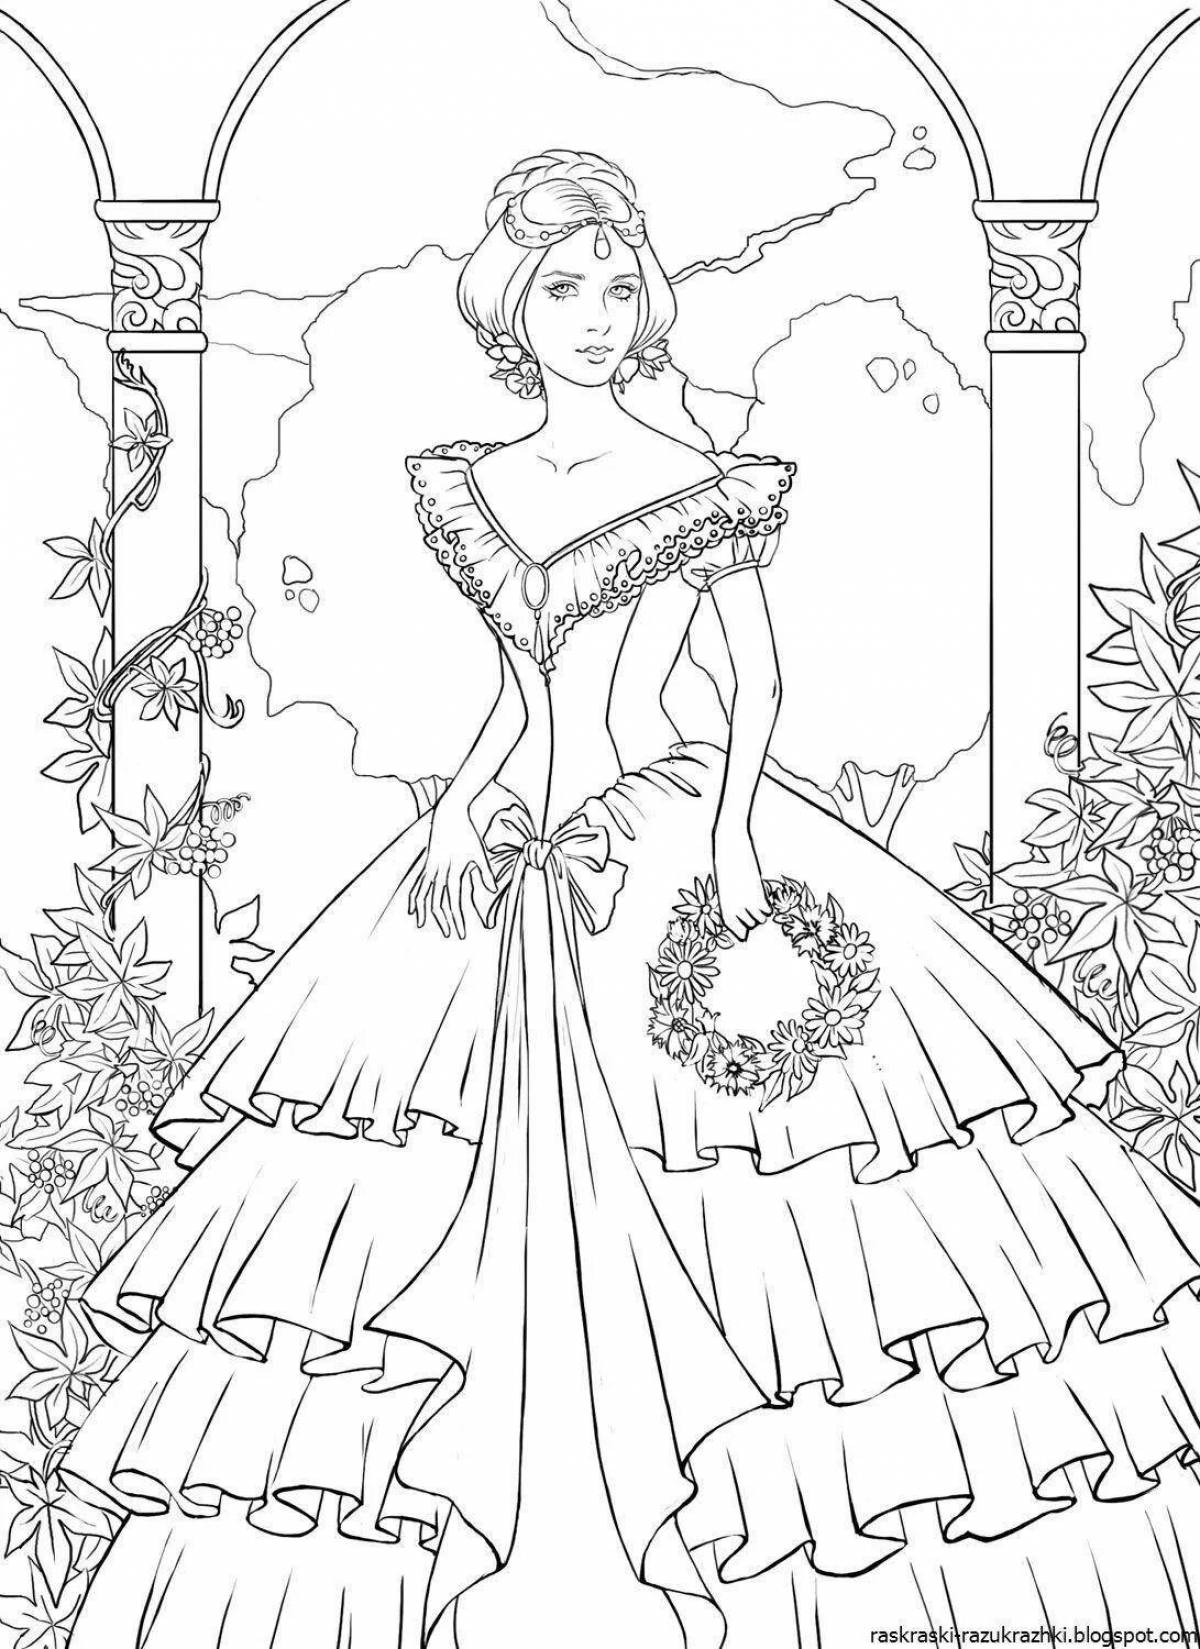 Dazzling princess coloring book for girls in beautiful dresses